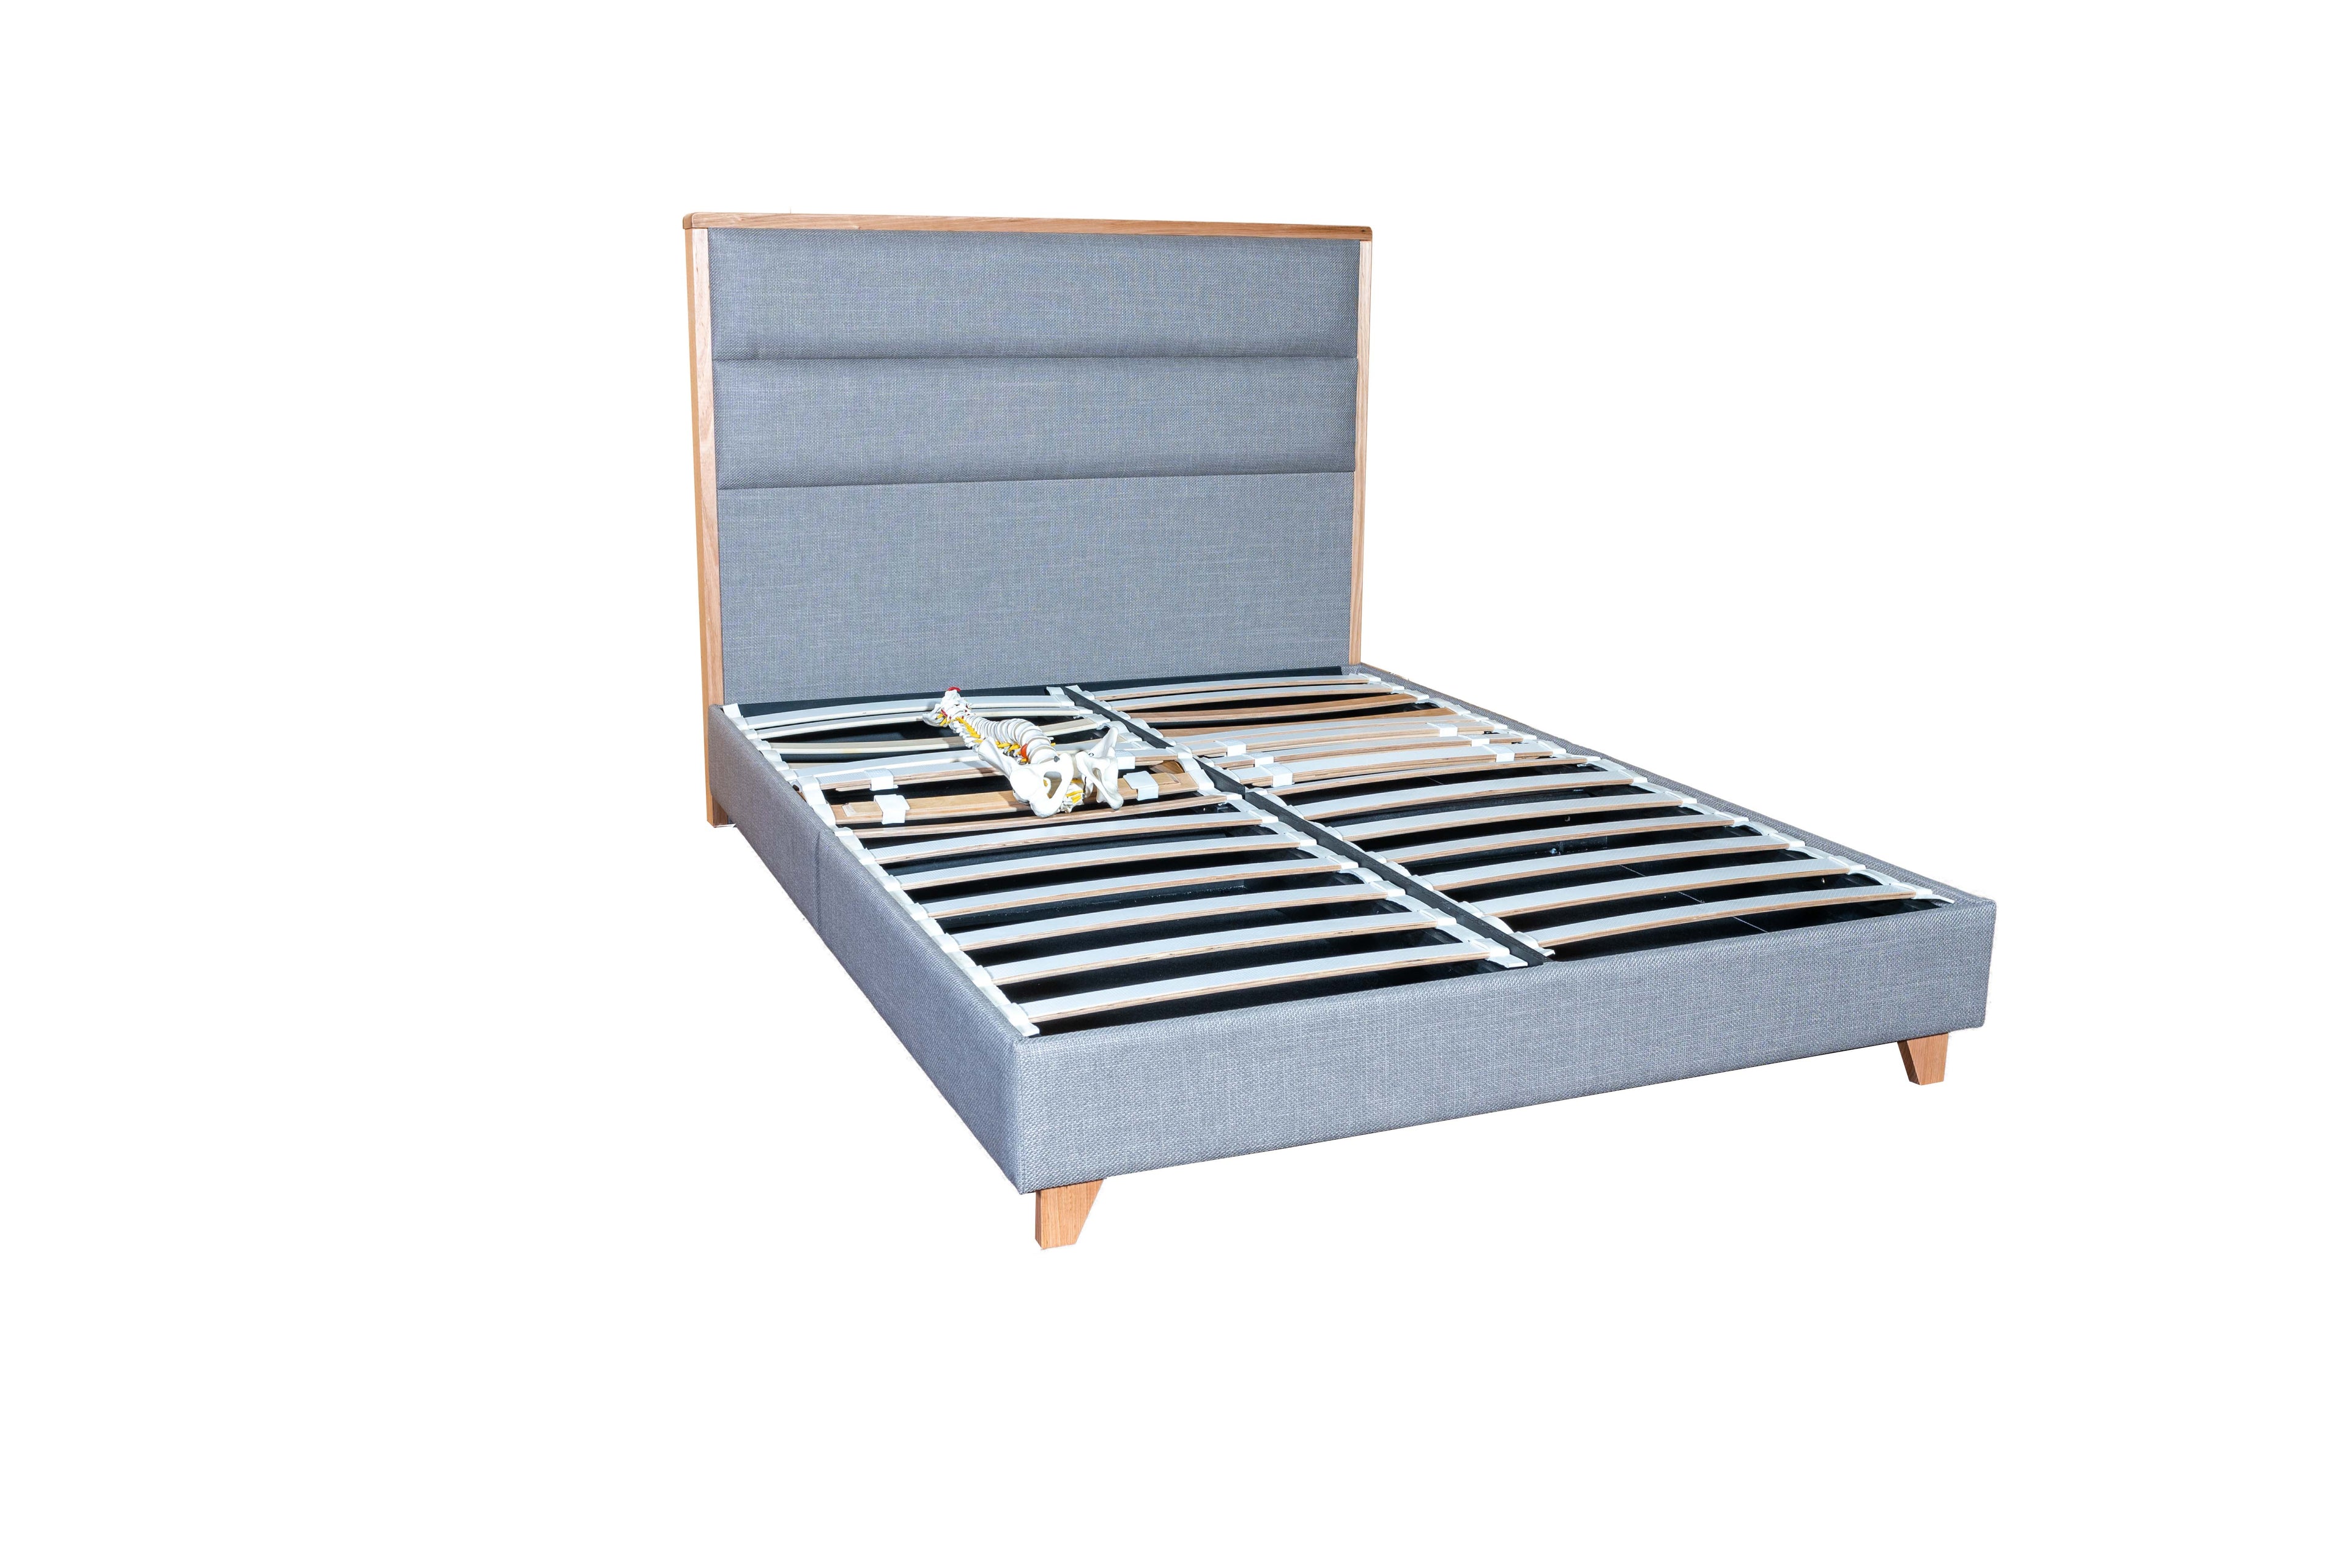 Ergolife Zero Stress - Ergonomic, EURO 190mm Base - Artisan Designer Beds frames